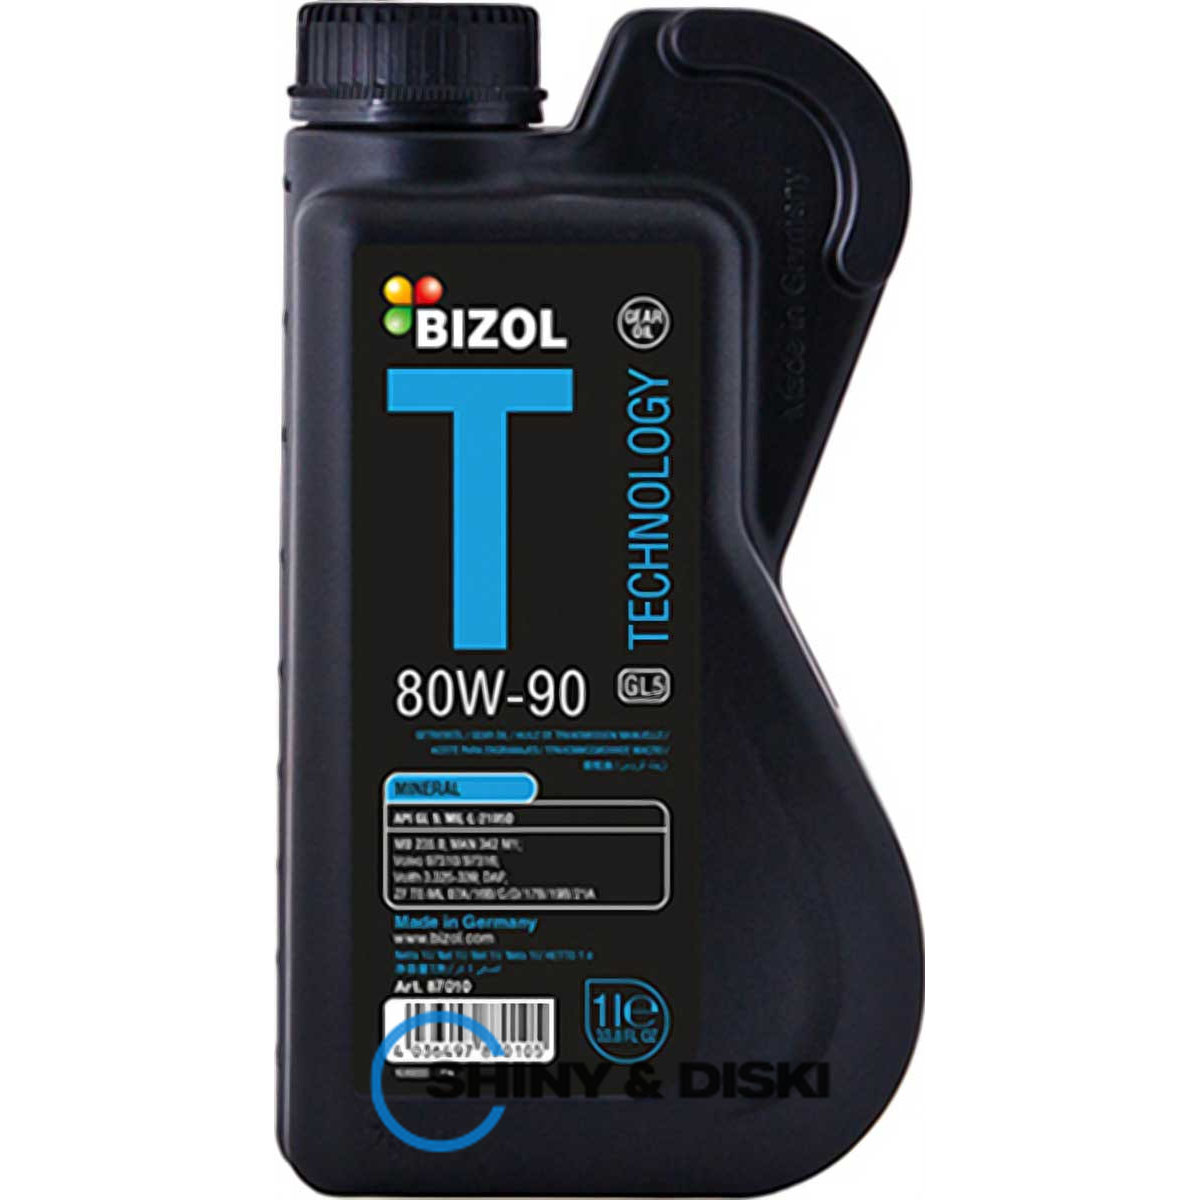 bizol technology gear oil